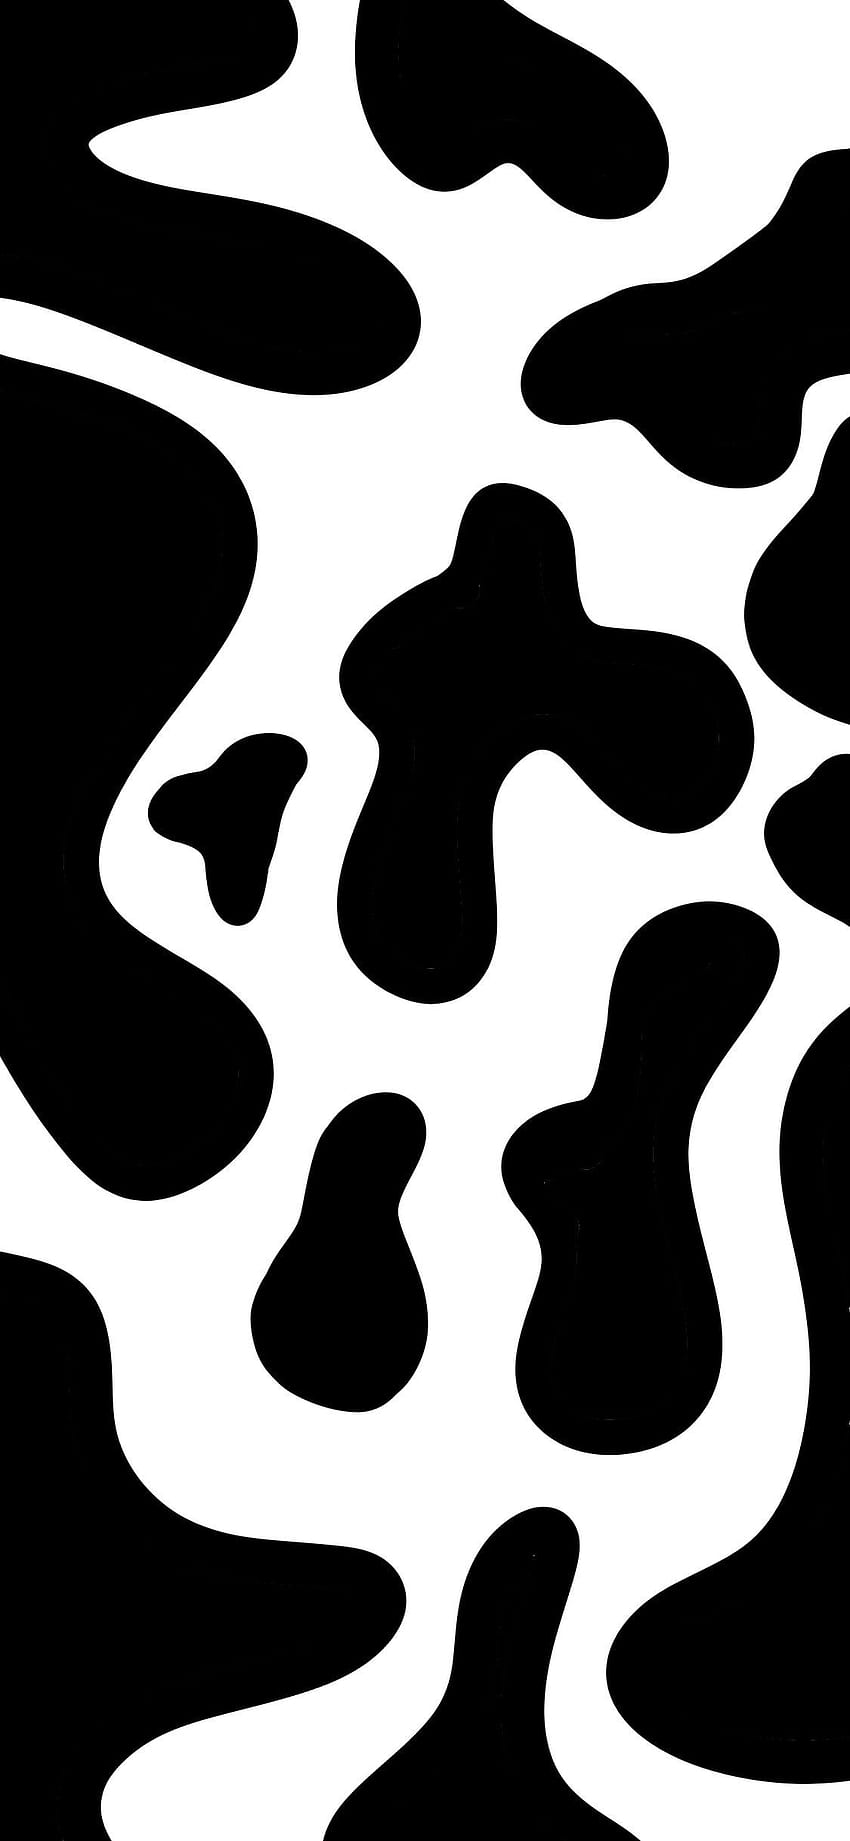 Cow Print Preppy Wallpaper  JPG  Templatenet